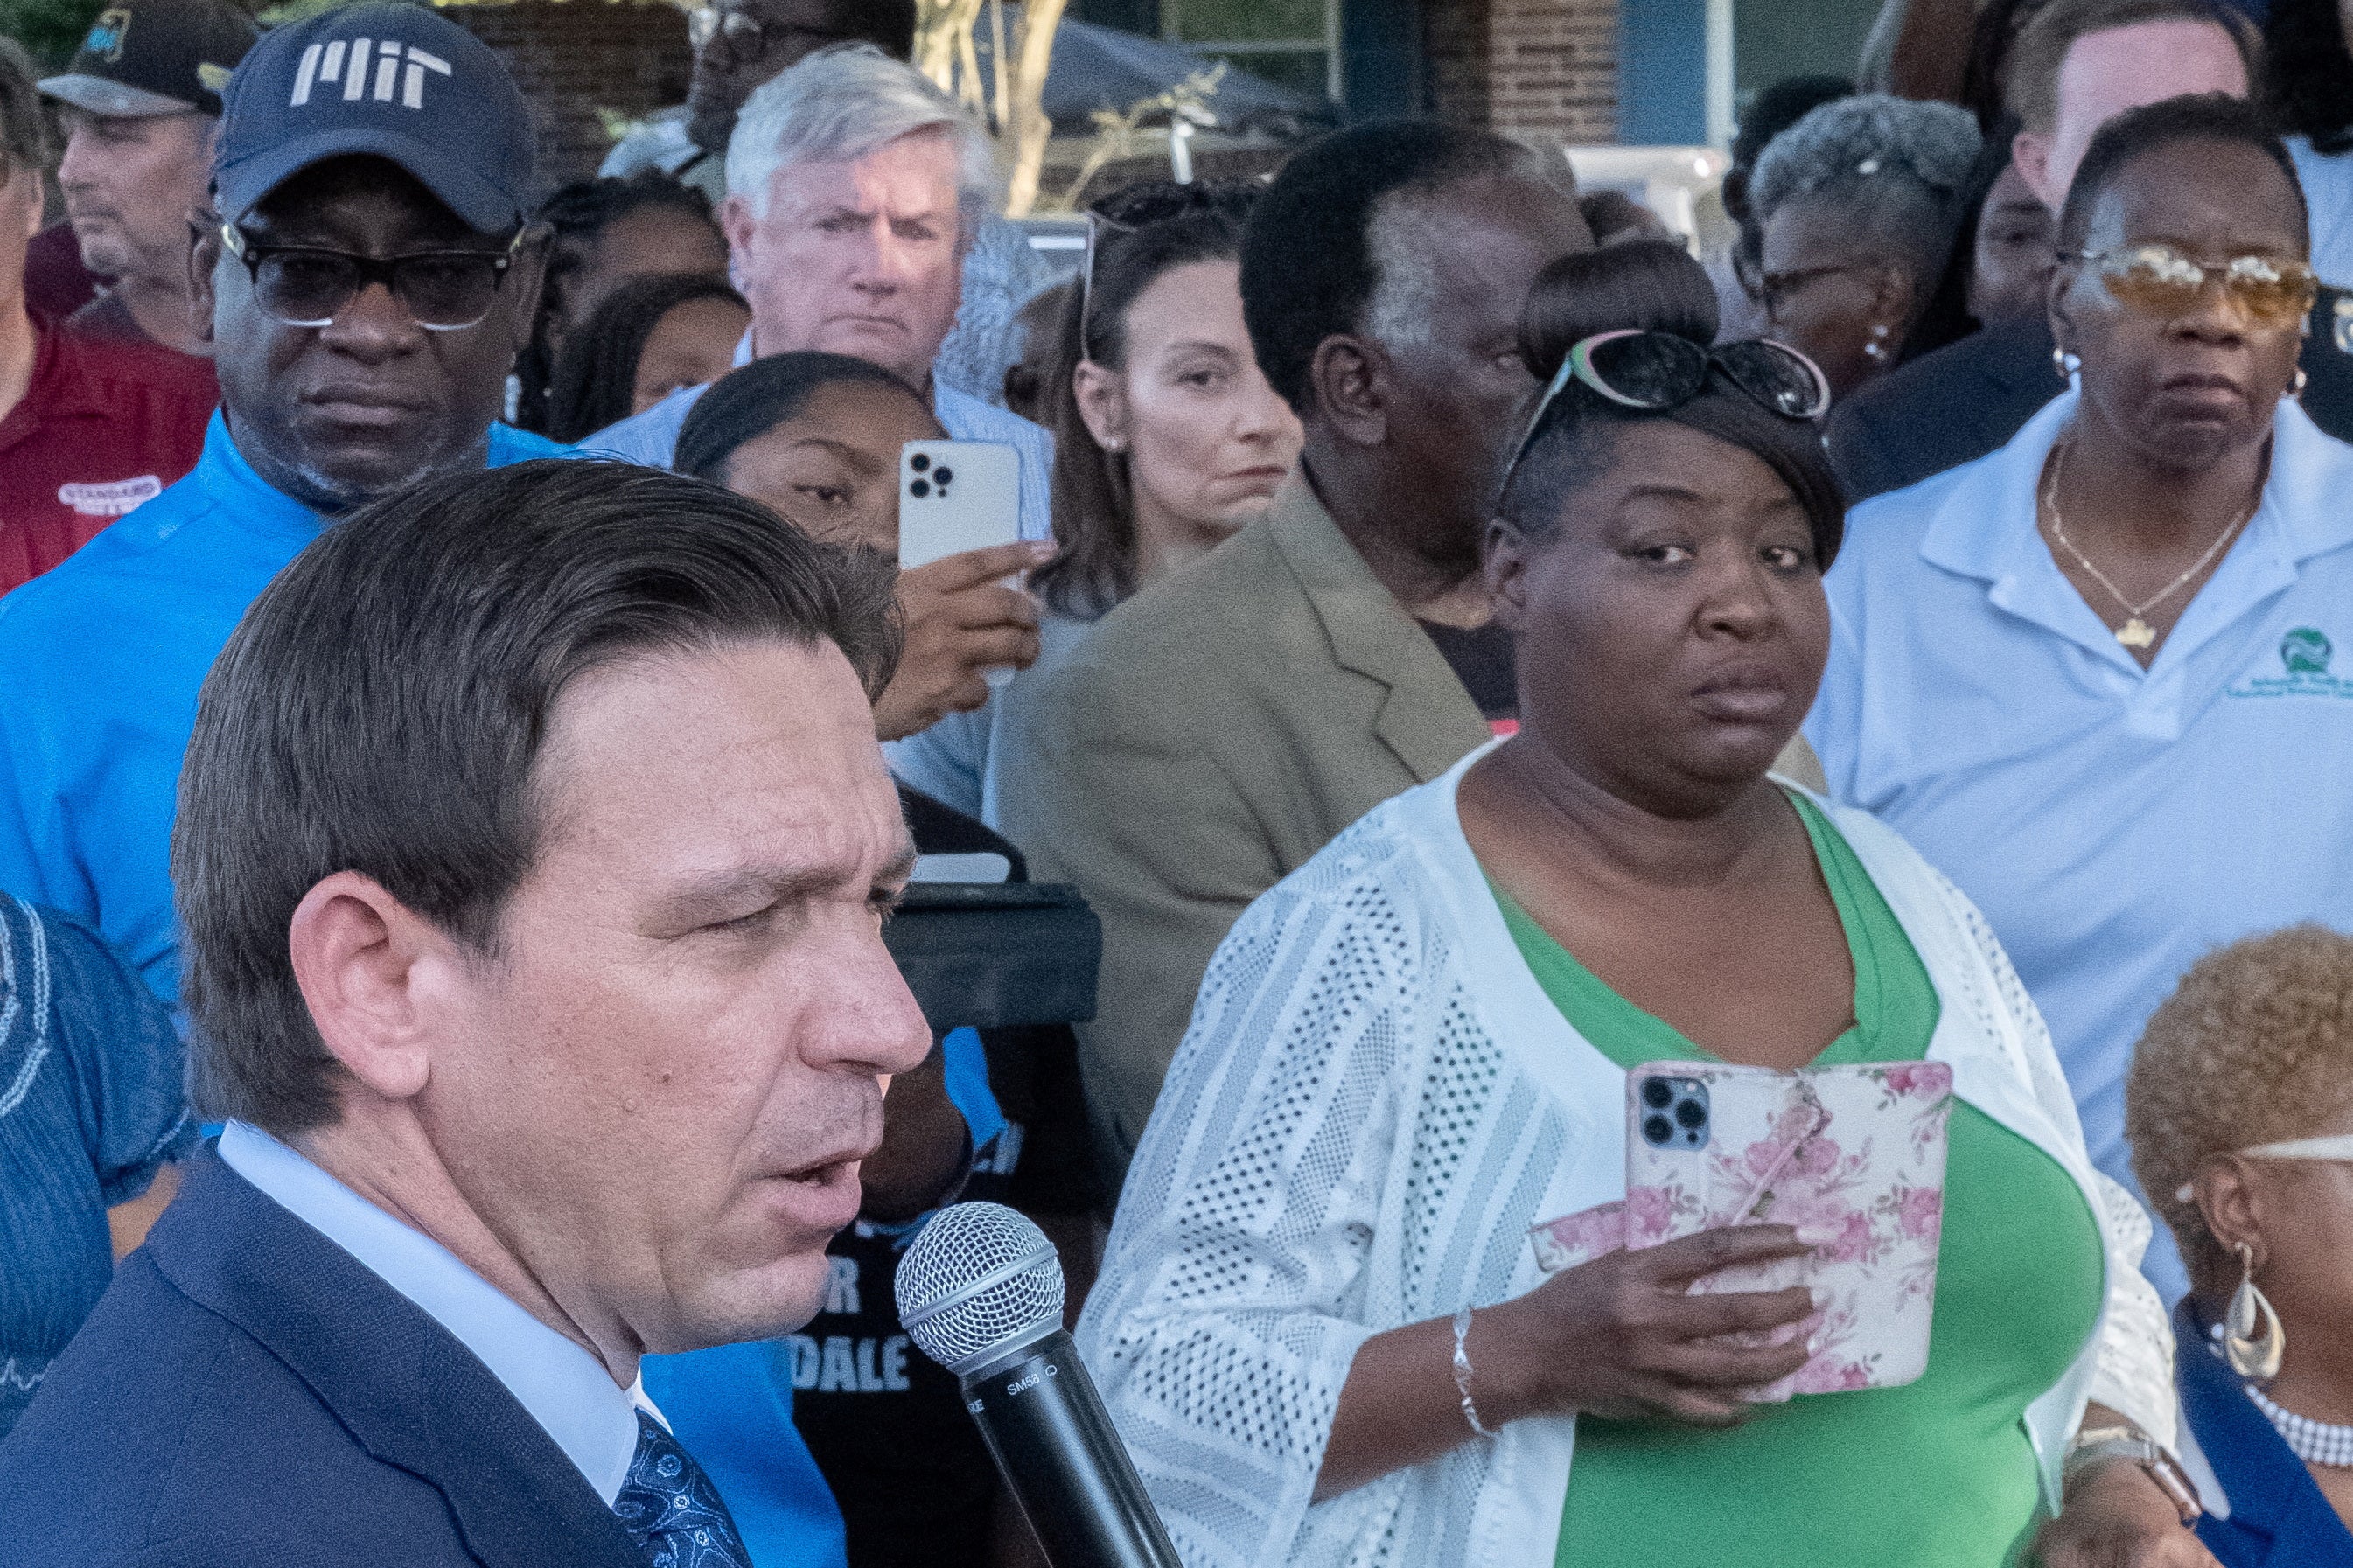 Florida Governor Ron DeSantis speaks at a prayer vigil in Jacksonville